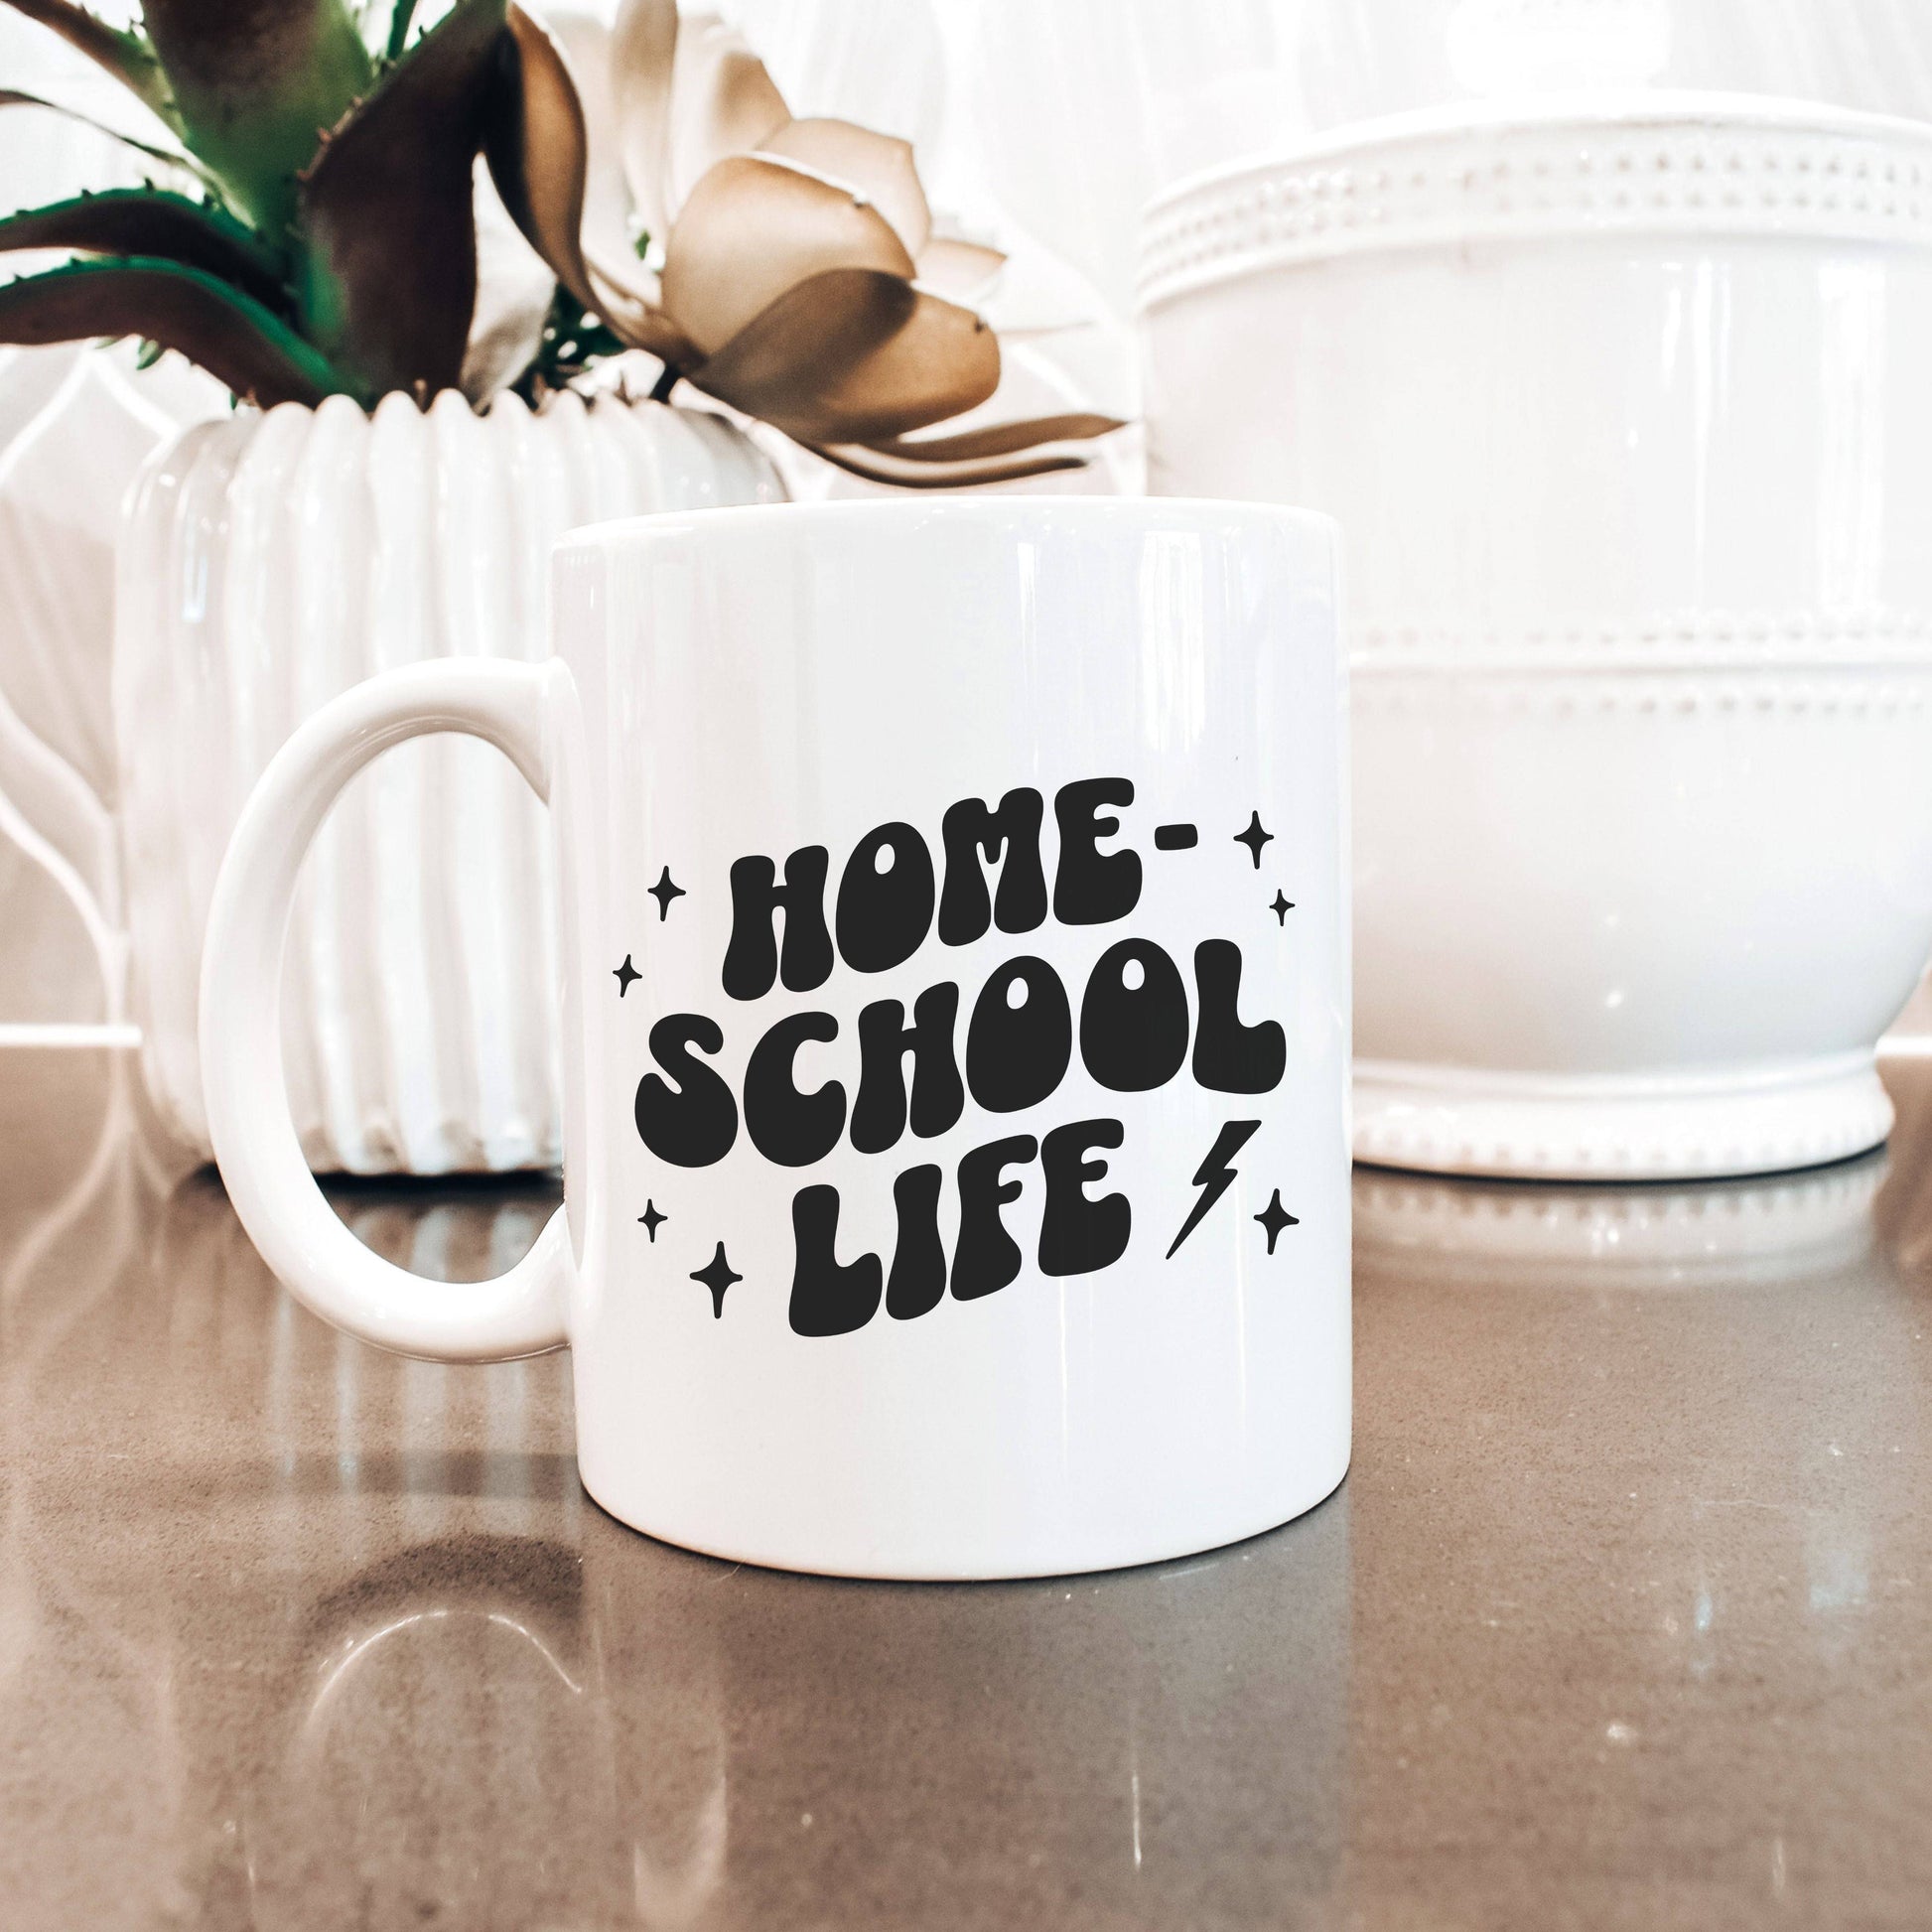 Homeschool Life Mug 11oz in Black on White Ceramic